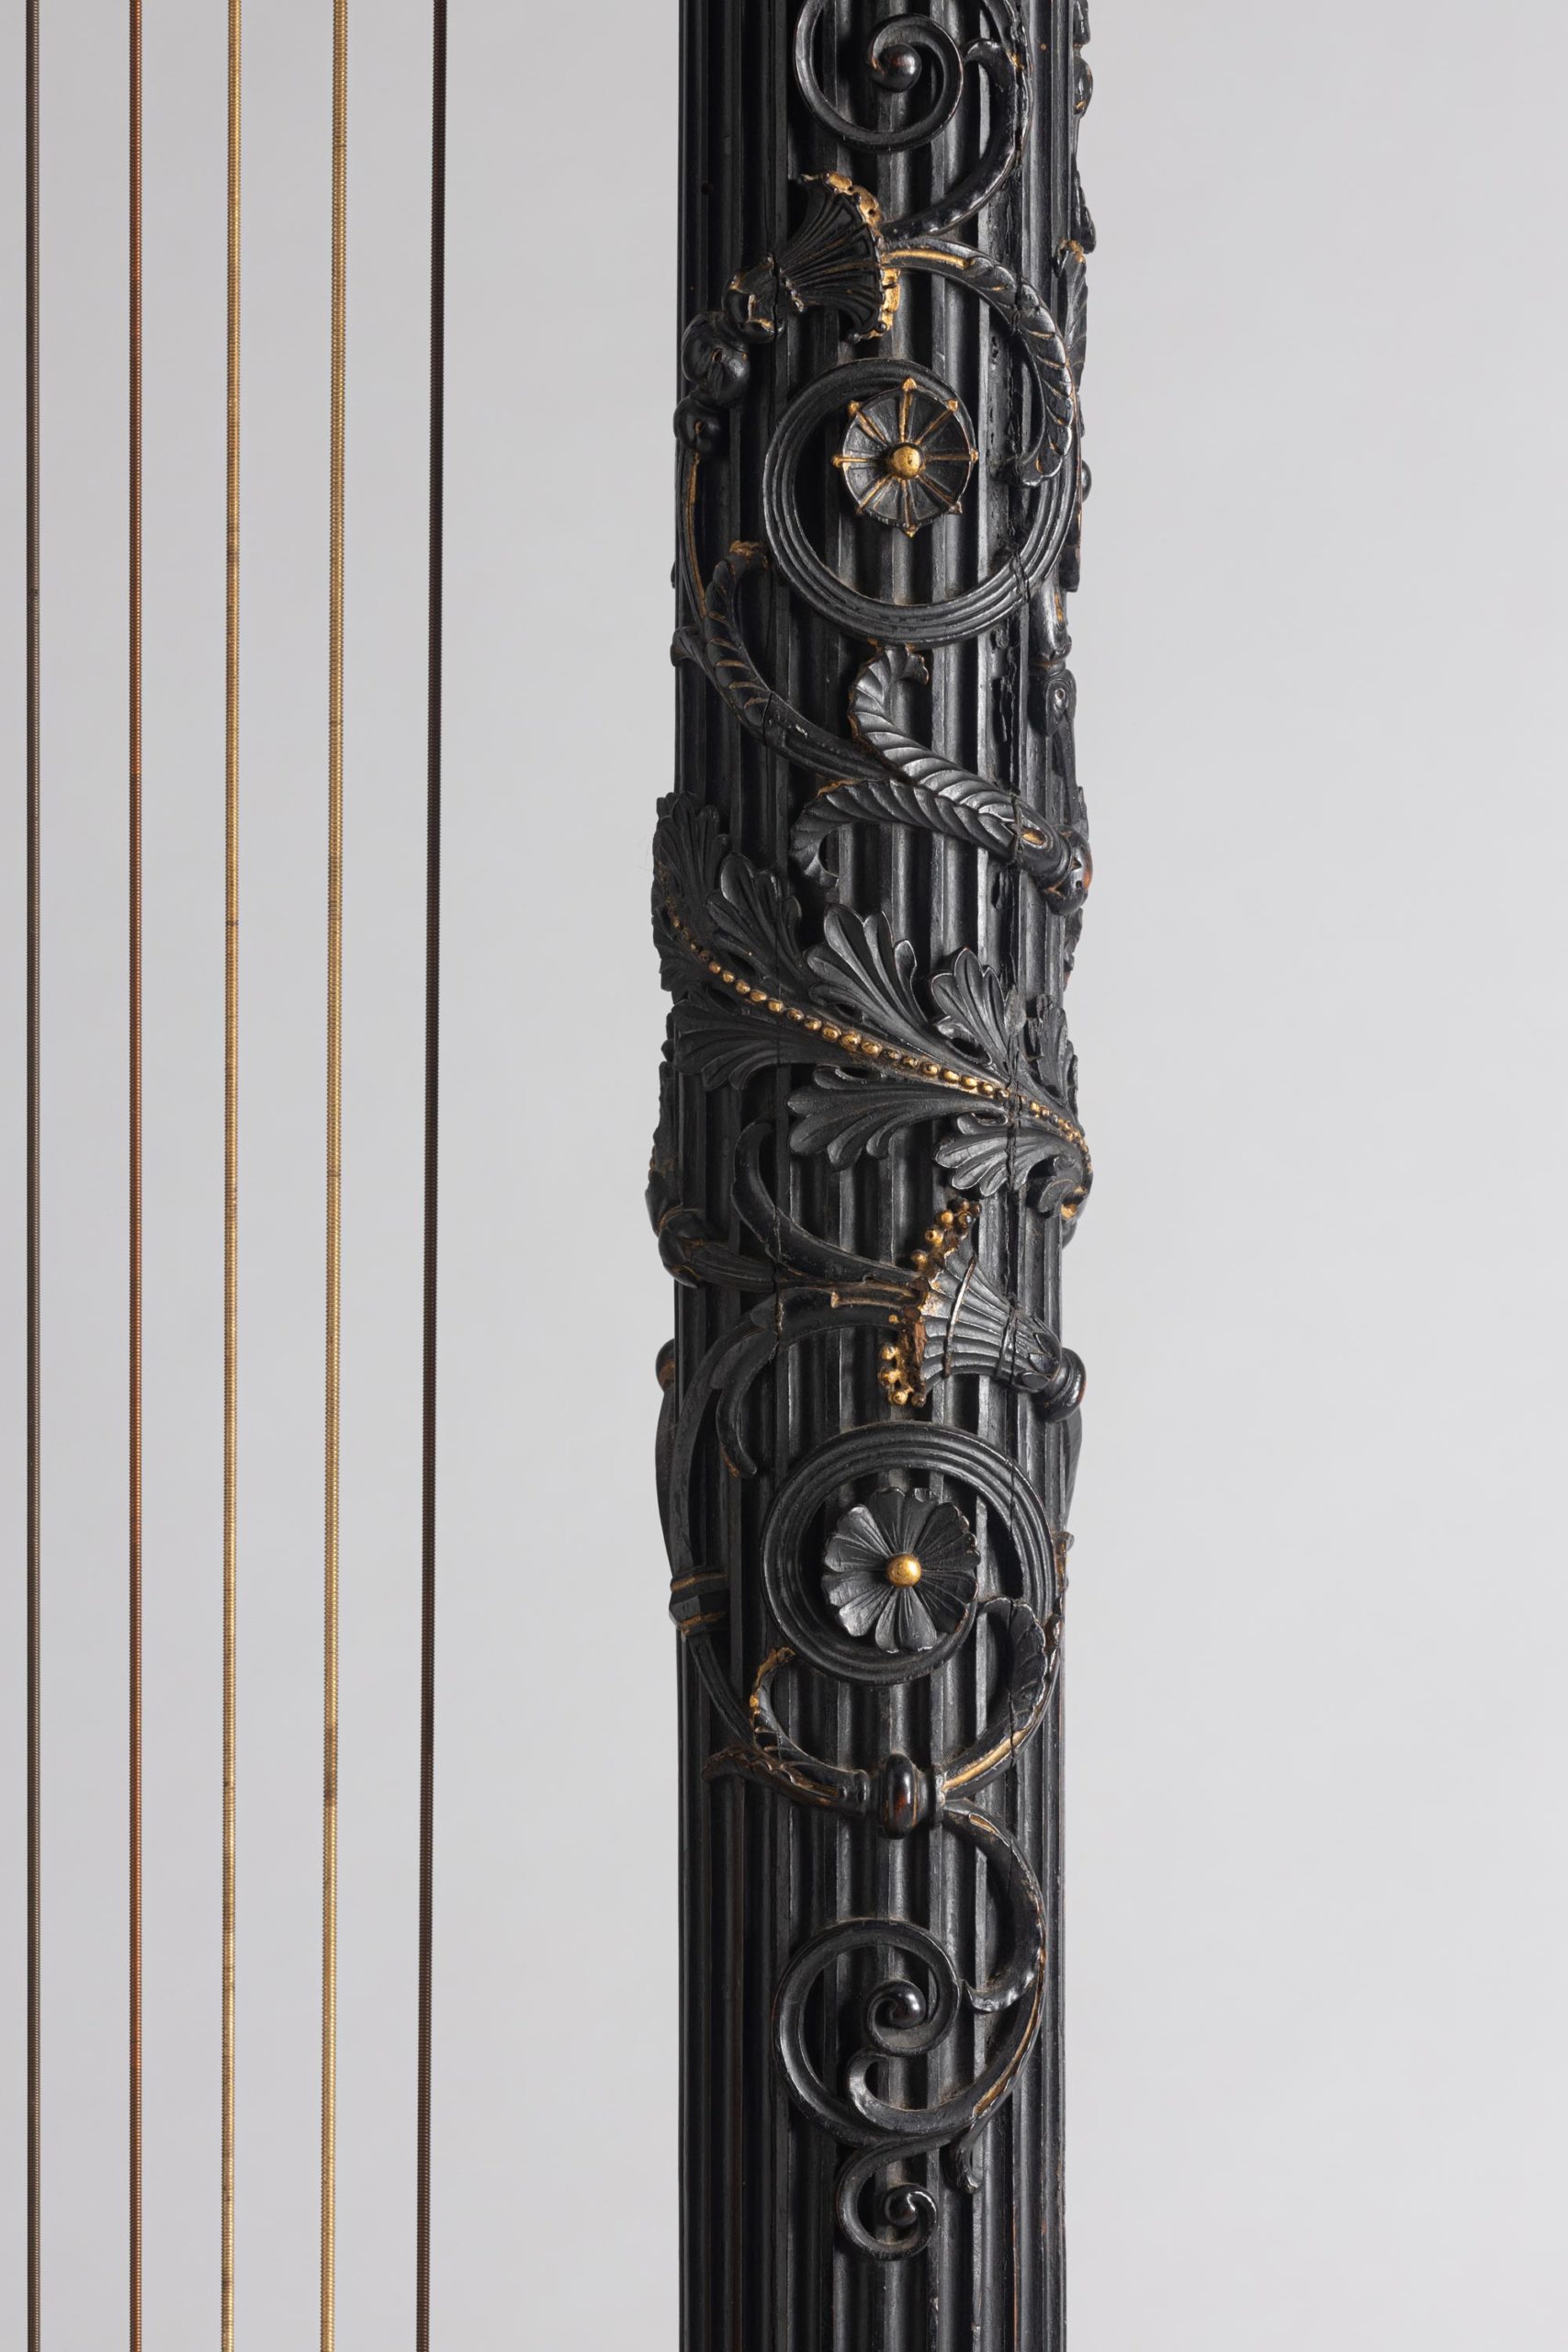 Harpe ERARD de style néo-grec, 1873